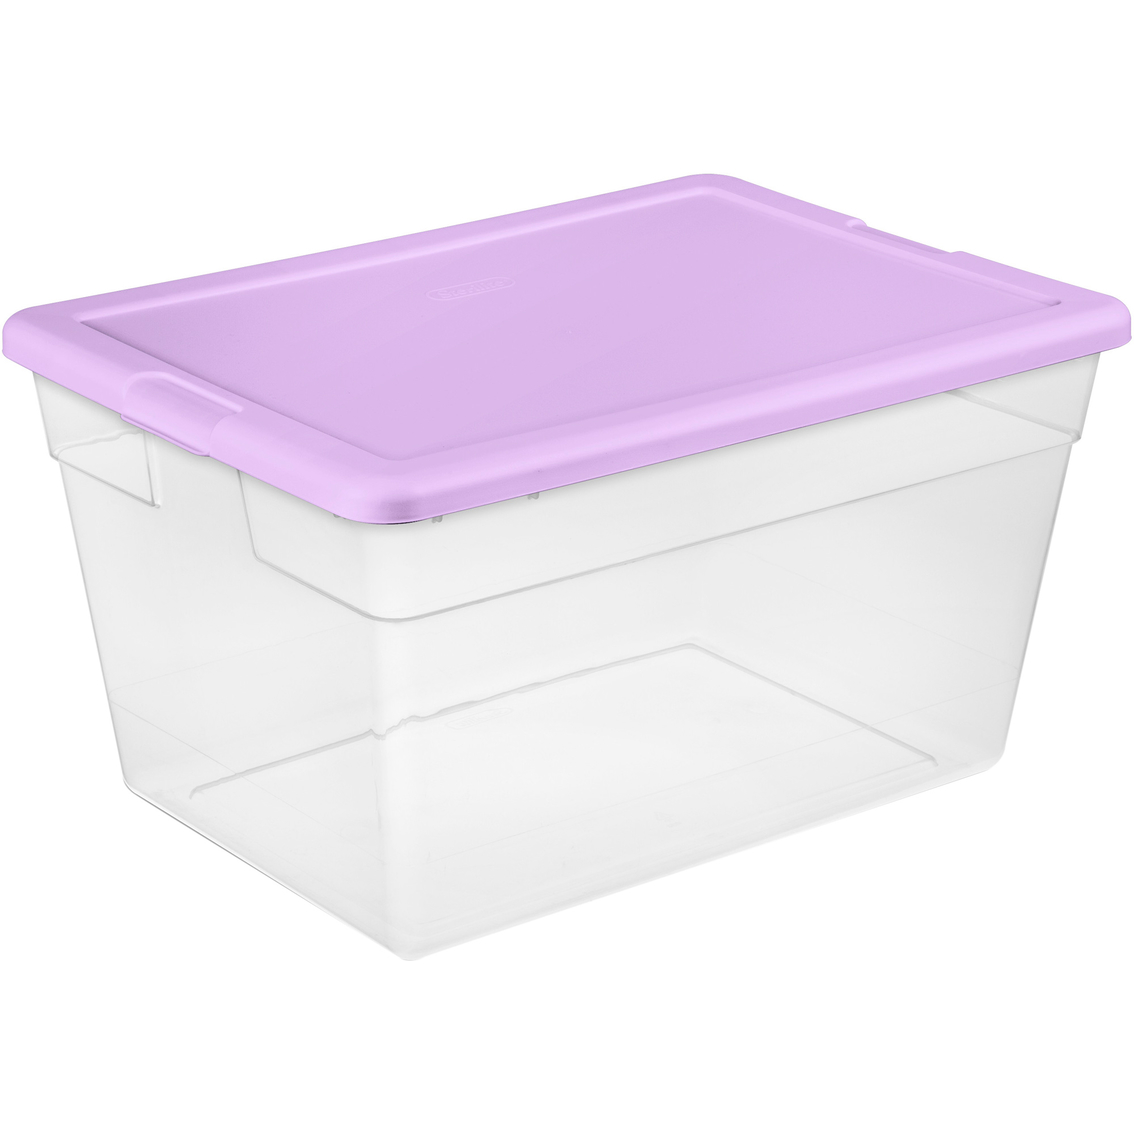 Sterilite 56 Qt. Storage Box Lilac Pixie, Plastic Bins & Drawers, Household